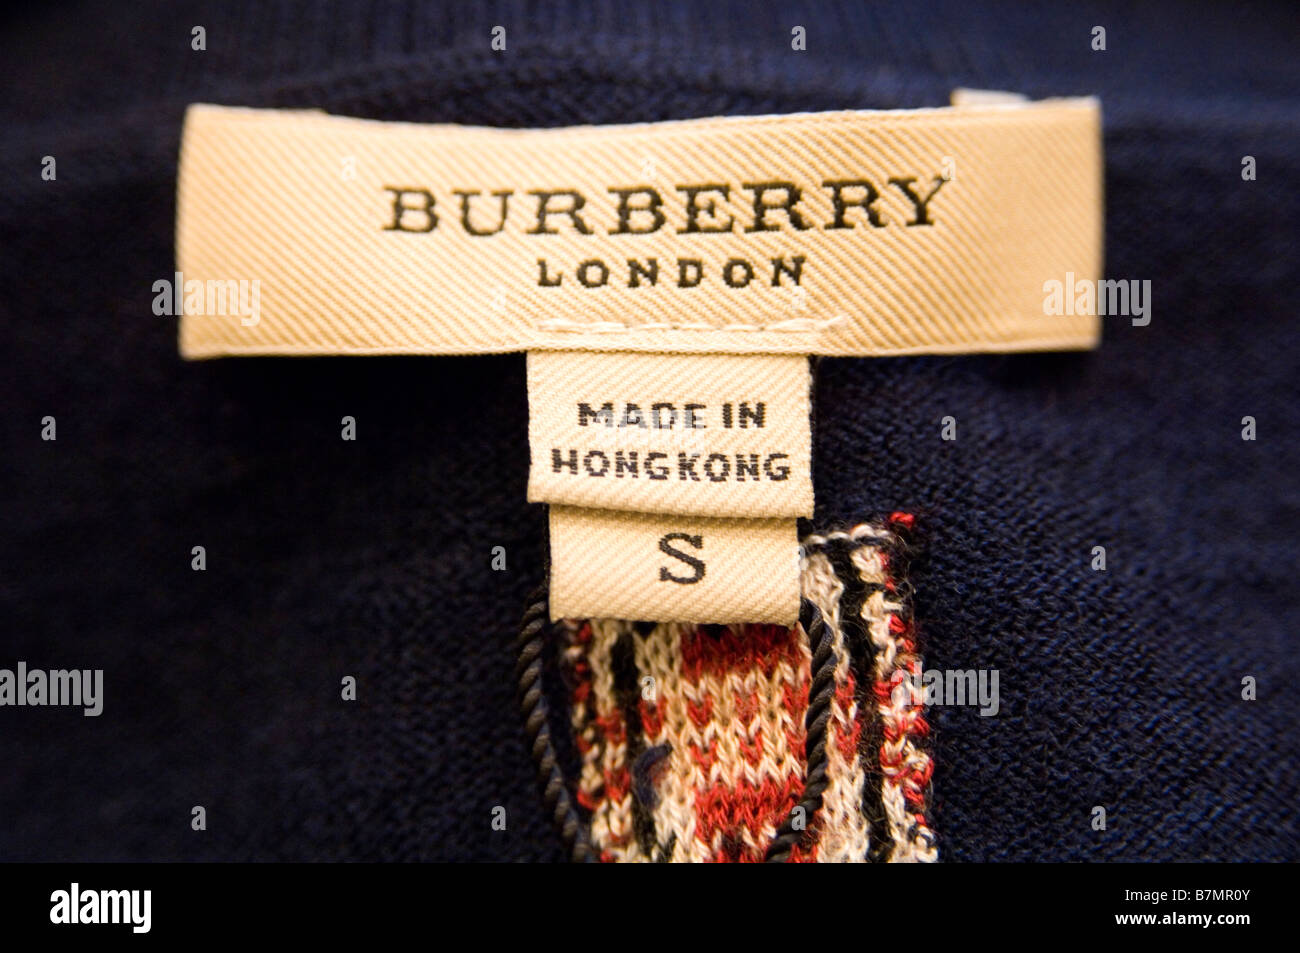 burberry london made in hong kong